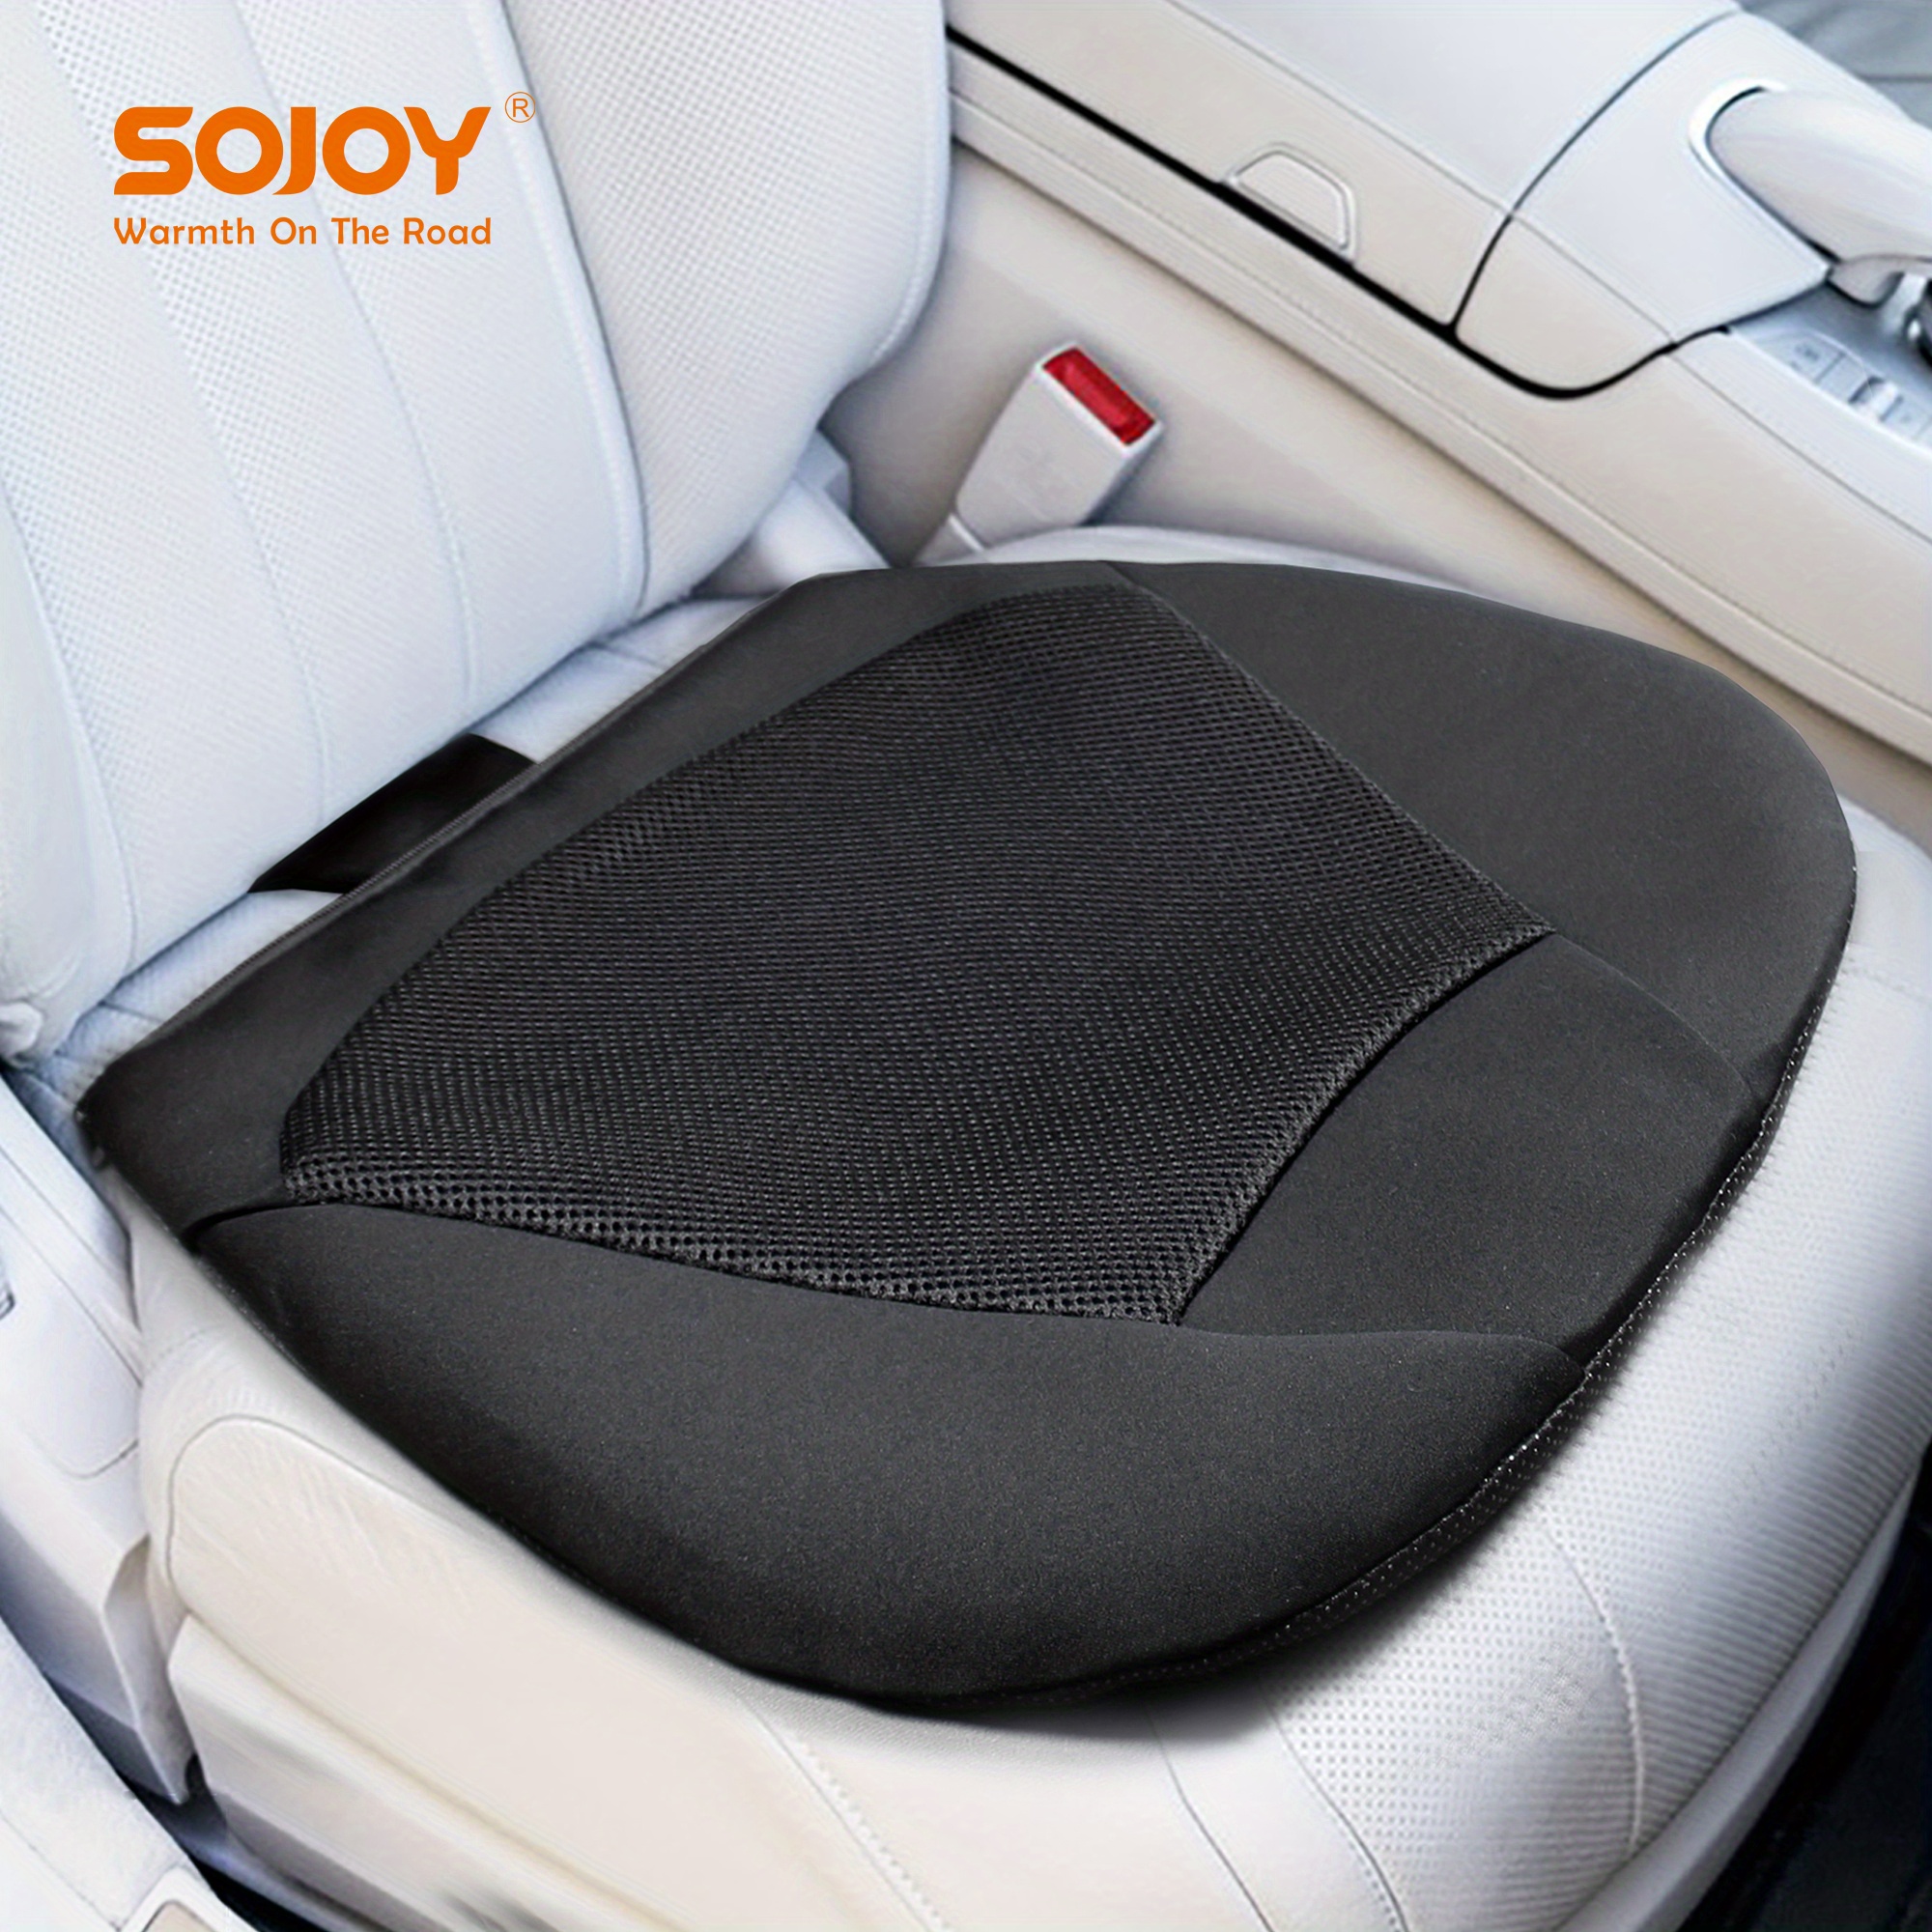 Gel Seat Cushion Support Pad for Chair & Car - Tailbone, Coccyx